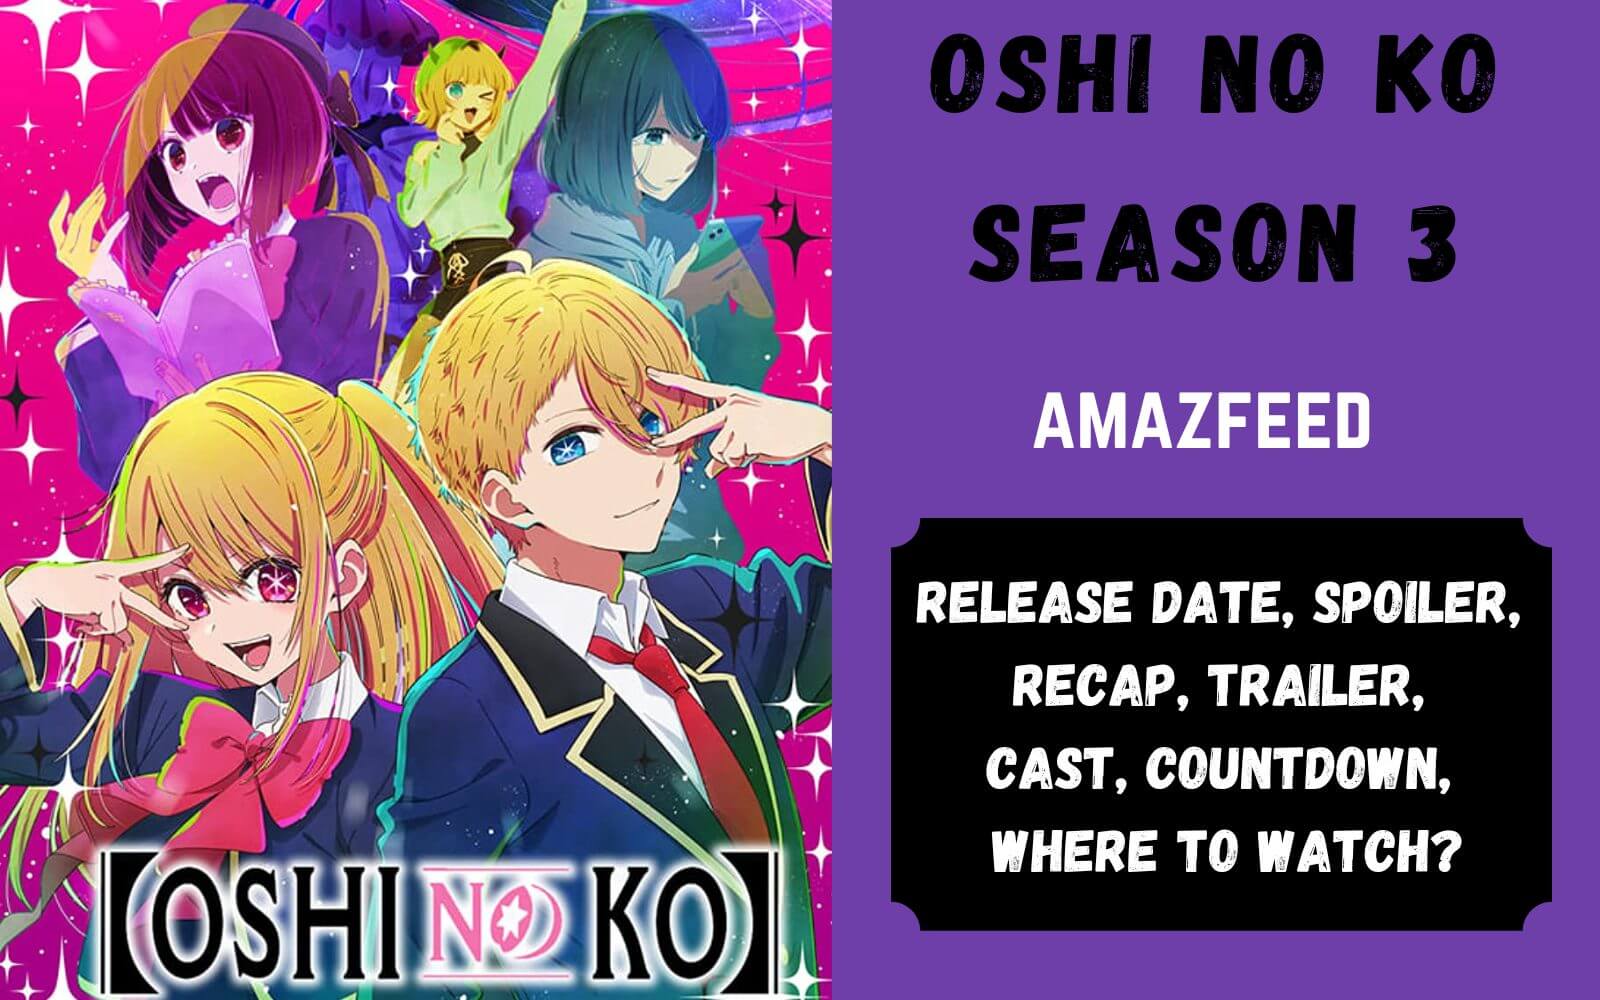 Oshi no Ko Season 2 Release Date, Trailer, Cast, Expectation